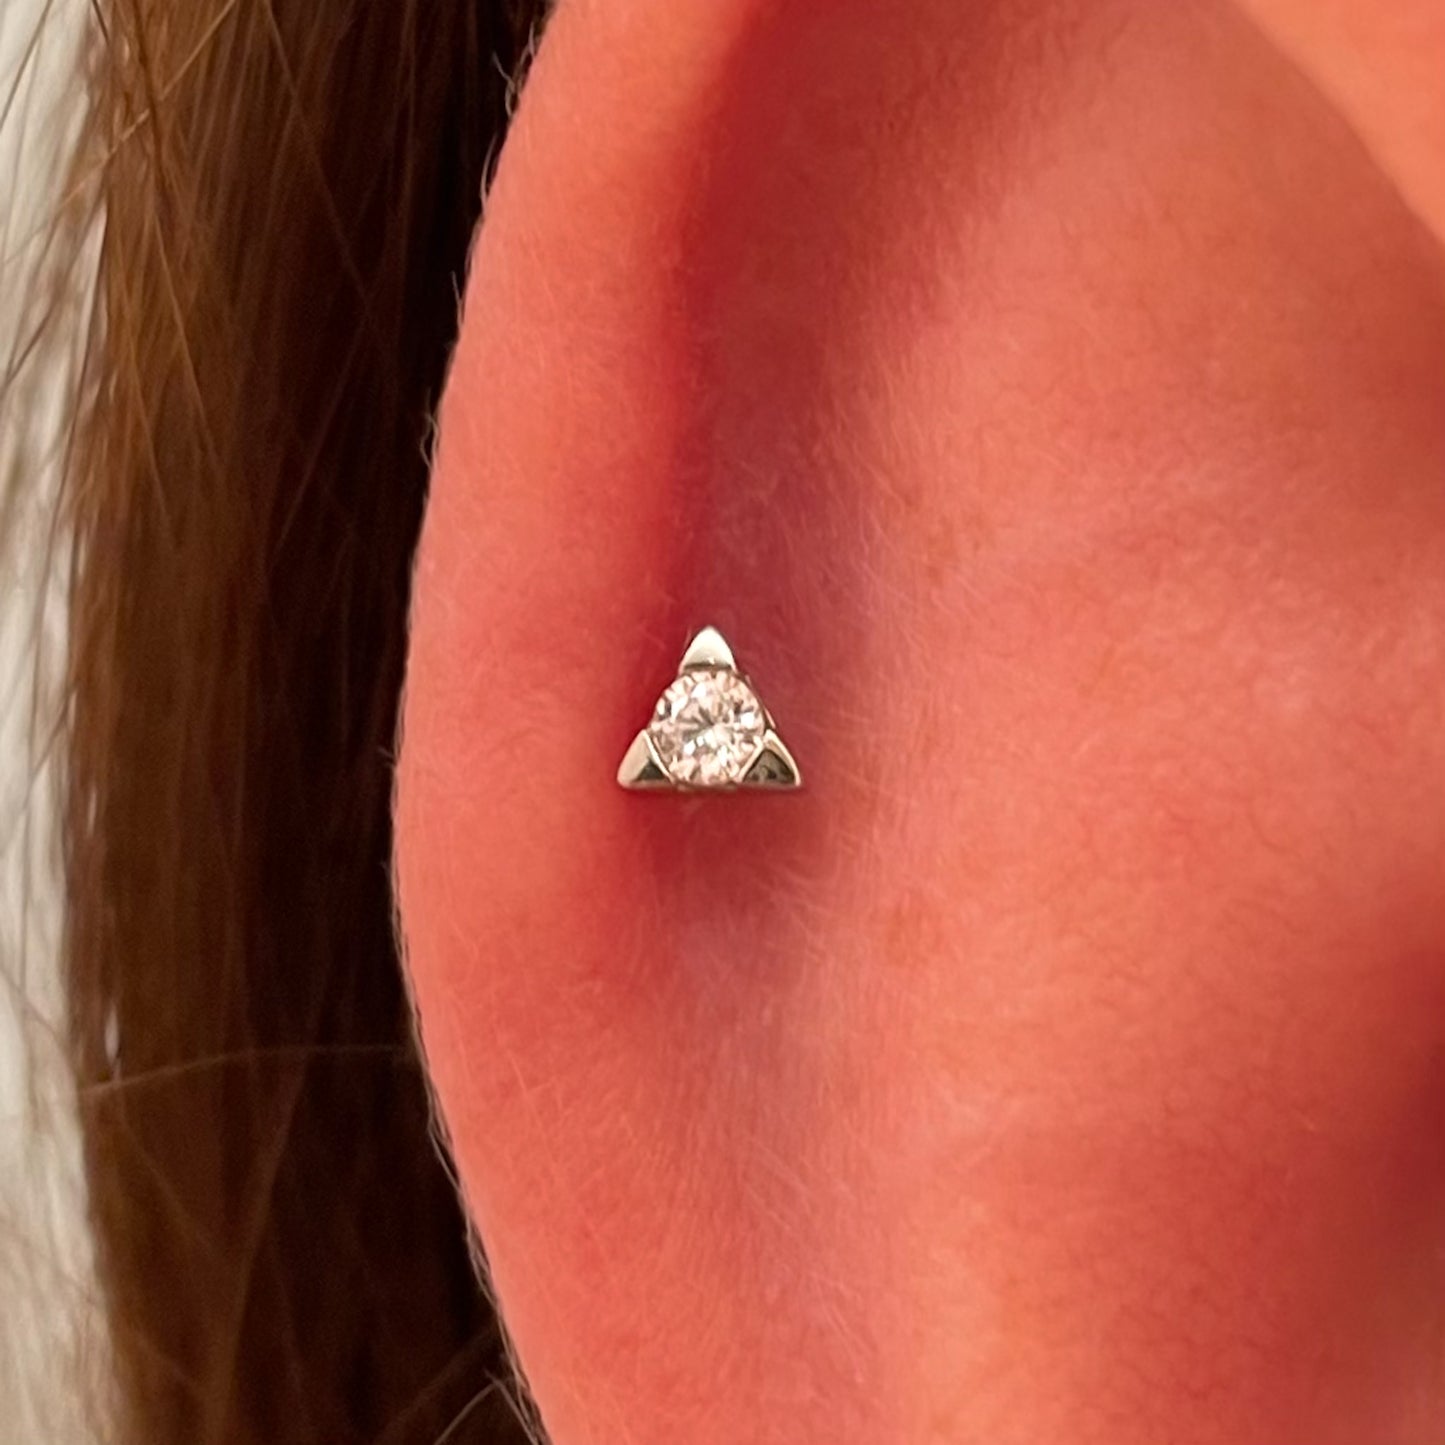 9k solid white gold tiny triangle Celeste crystal flat back labret stud earring 6mm